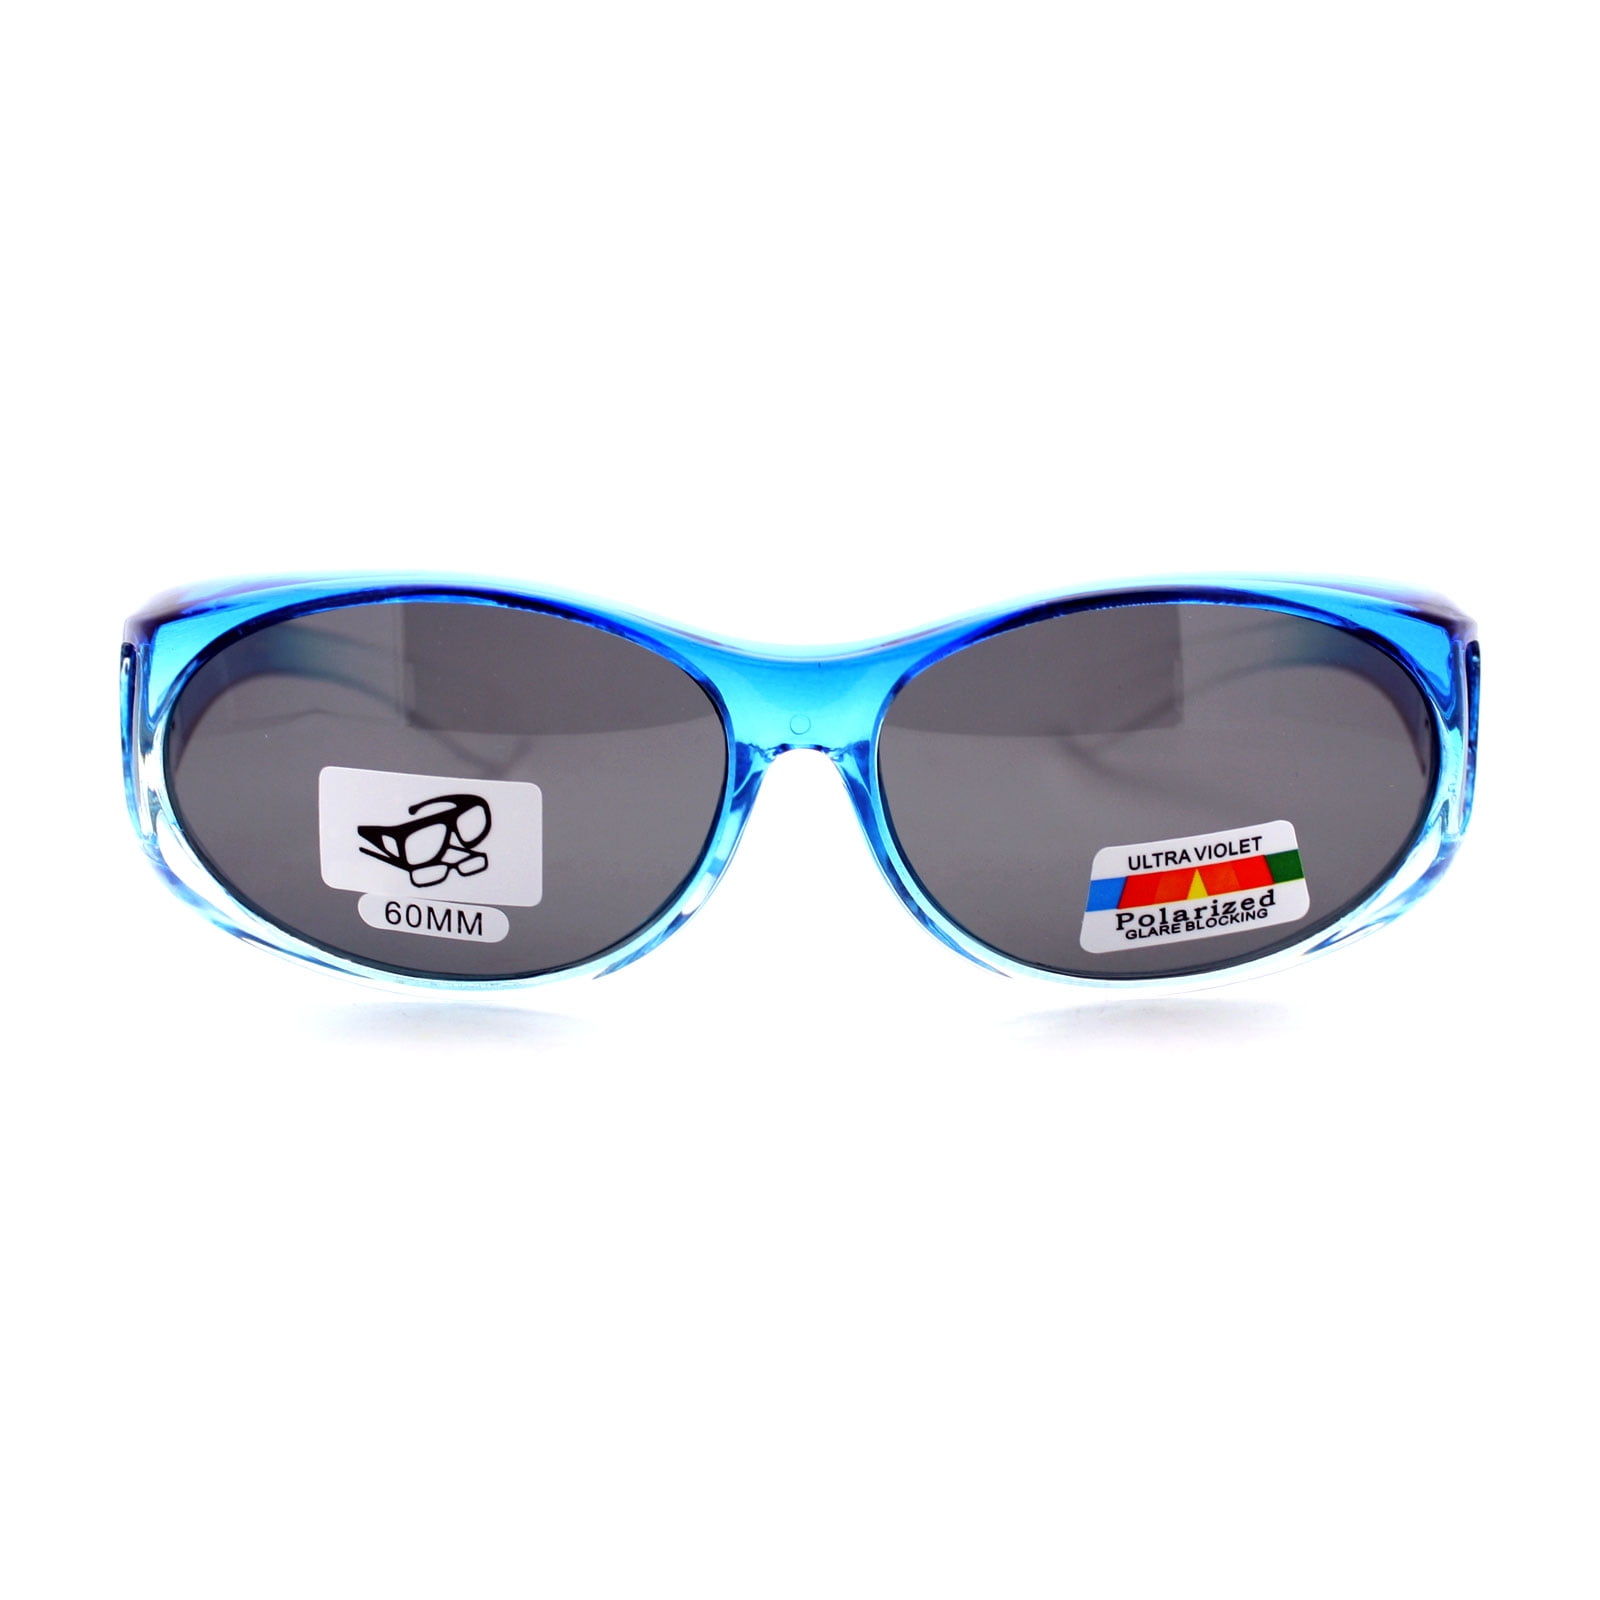 SA106 - SA106 Polarized Anti-glare 60mm Fit Over OTG Sunglasses Blue ...